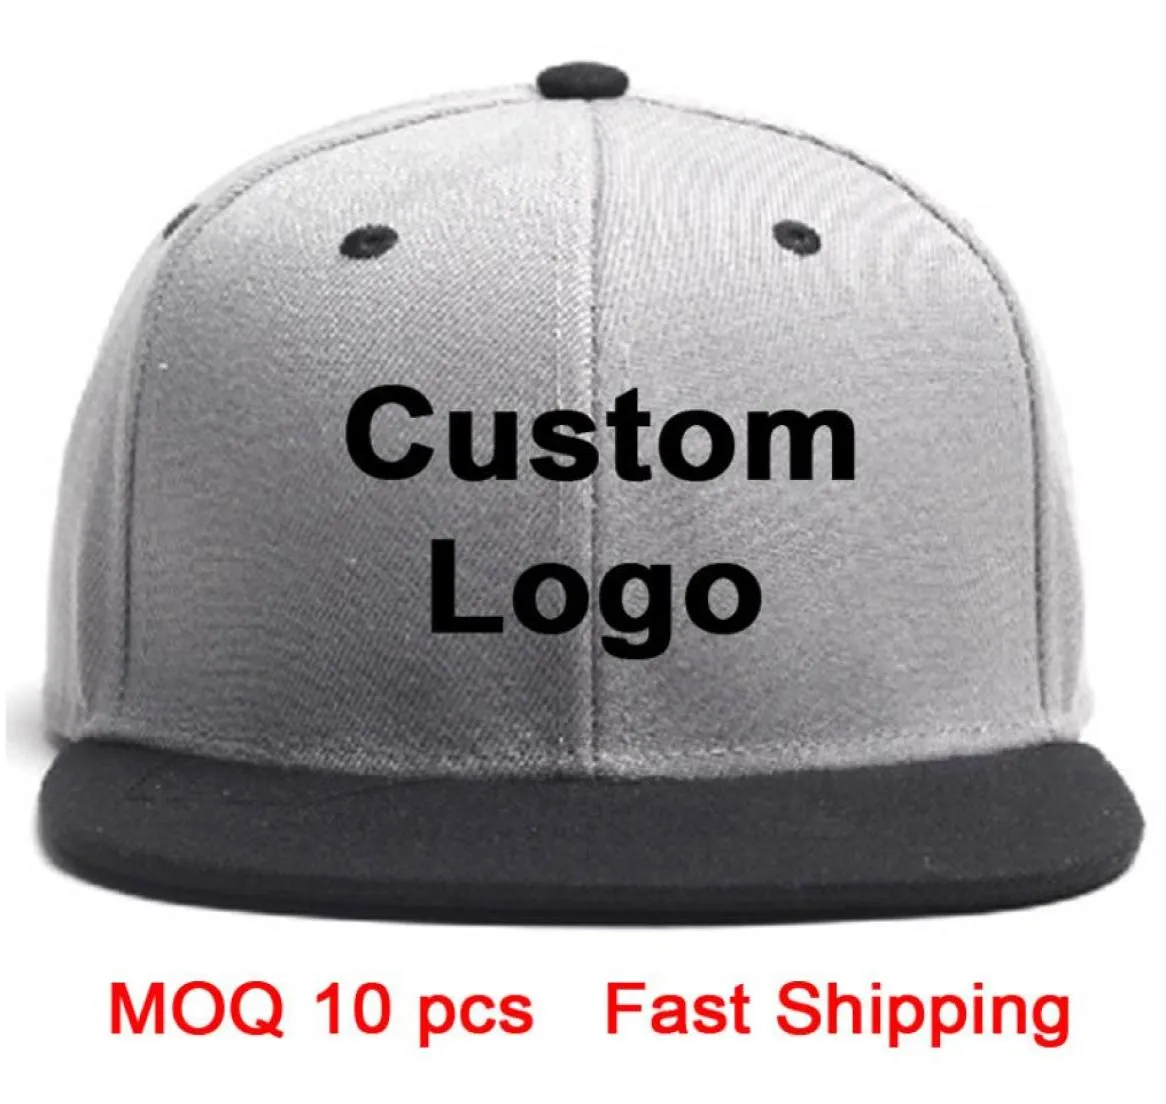 custom cap 3D embroidery logo flat brim tennis hip hop tour full close fitted trucker baseball sport custom customized snapback ha4153505